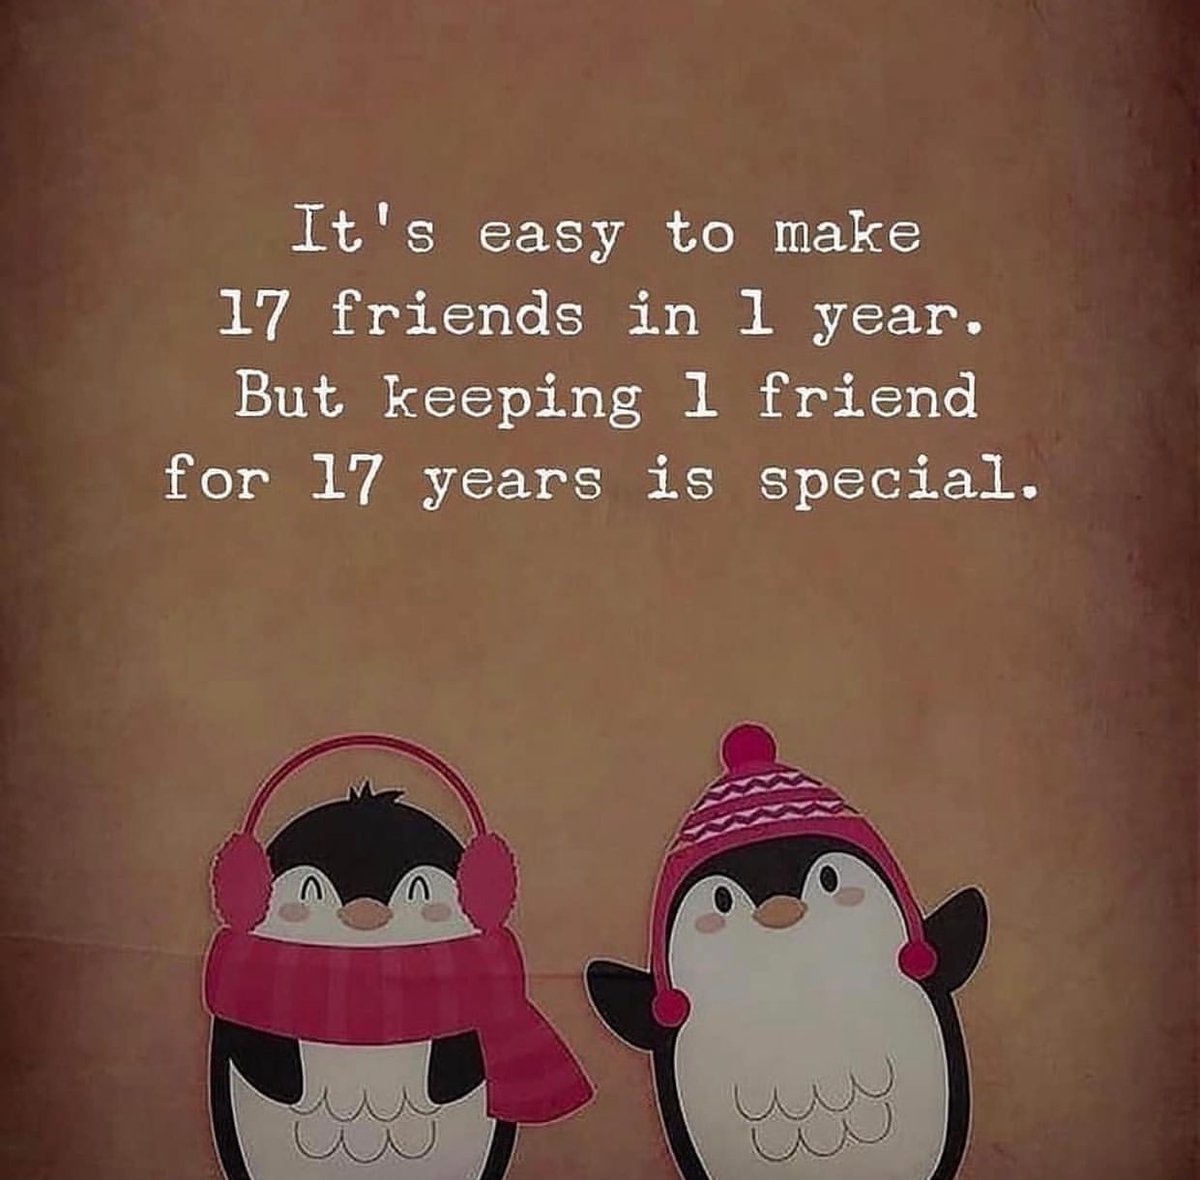 How many friends we make is easy to count, but the one we keep for years is priceless.🌟#truefriendship #specialbond

#natashastpier #ShopeeRamadan #cheatingwife #MoscowAttack #bbtvi #inesreg #chapri #Corrie #LoveIsland #RohitSharma𓃵